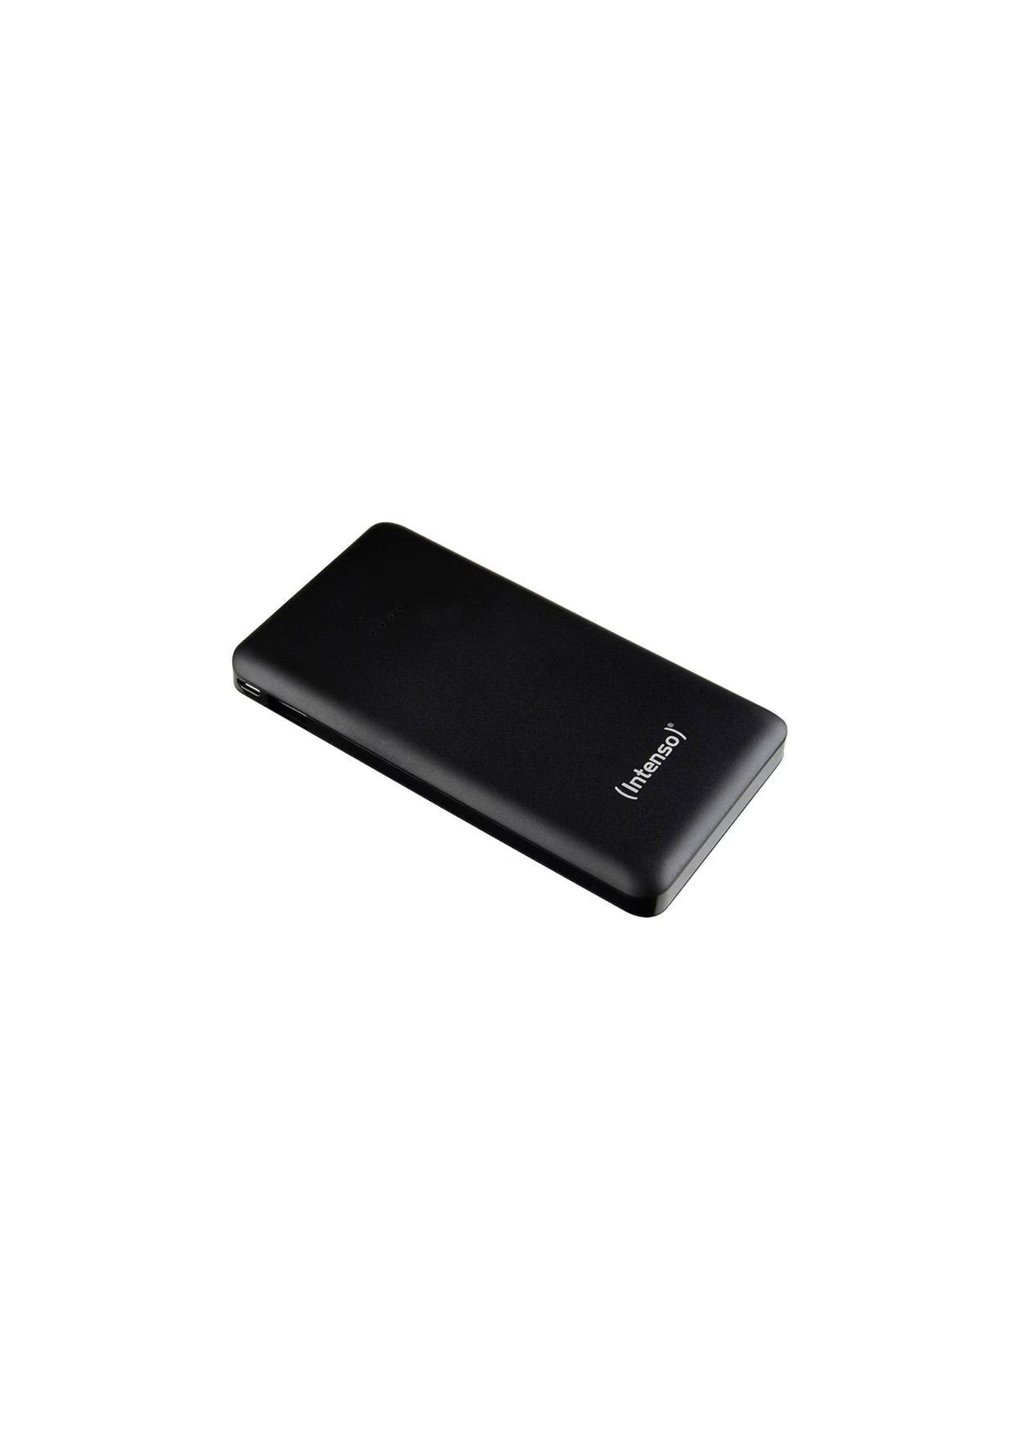 Батарея універсальна S10000 10000mAh microUSB, USB-A, 2.1A, Black (7332530) Intenso (257256824)